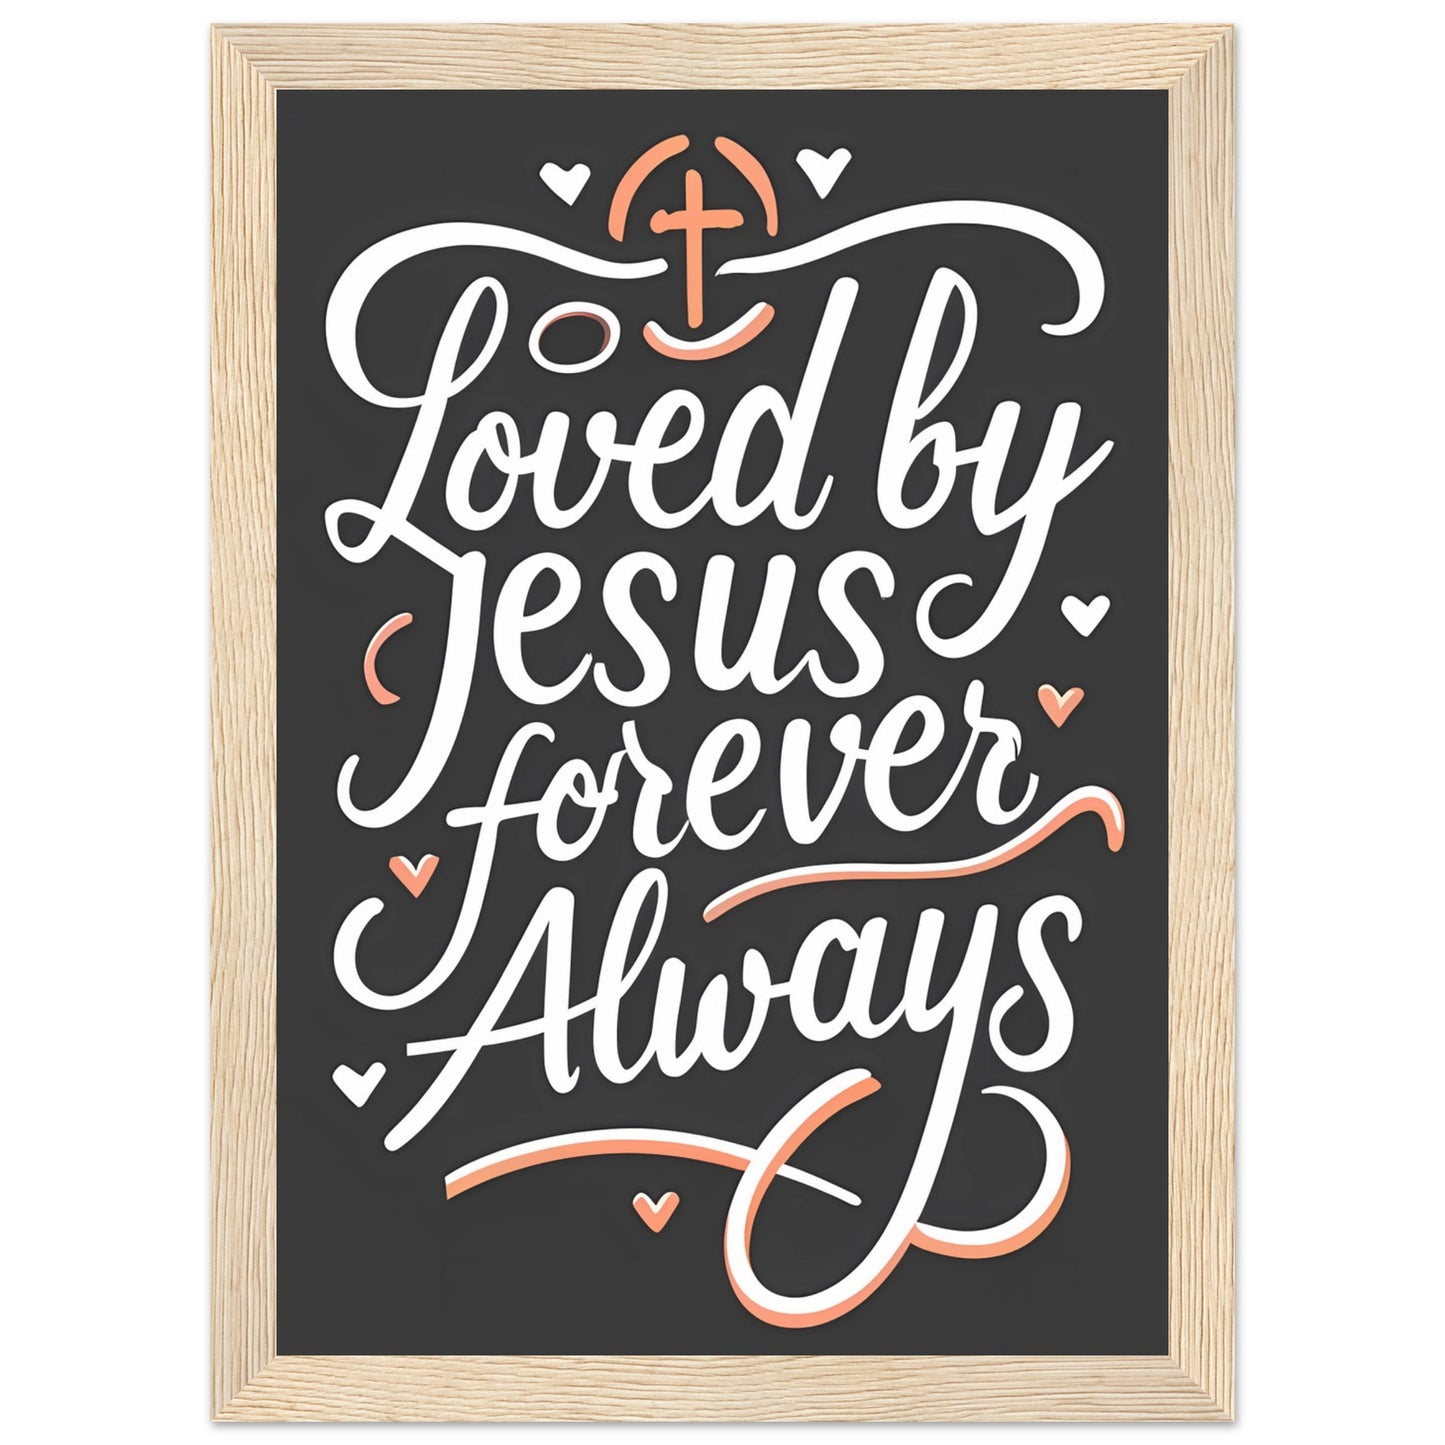 Loved by Jesus, Forever Always Framed Poster